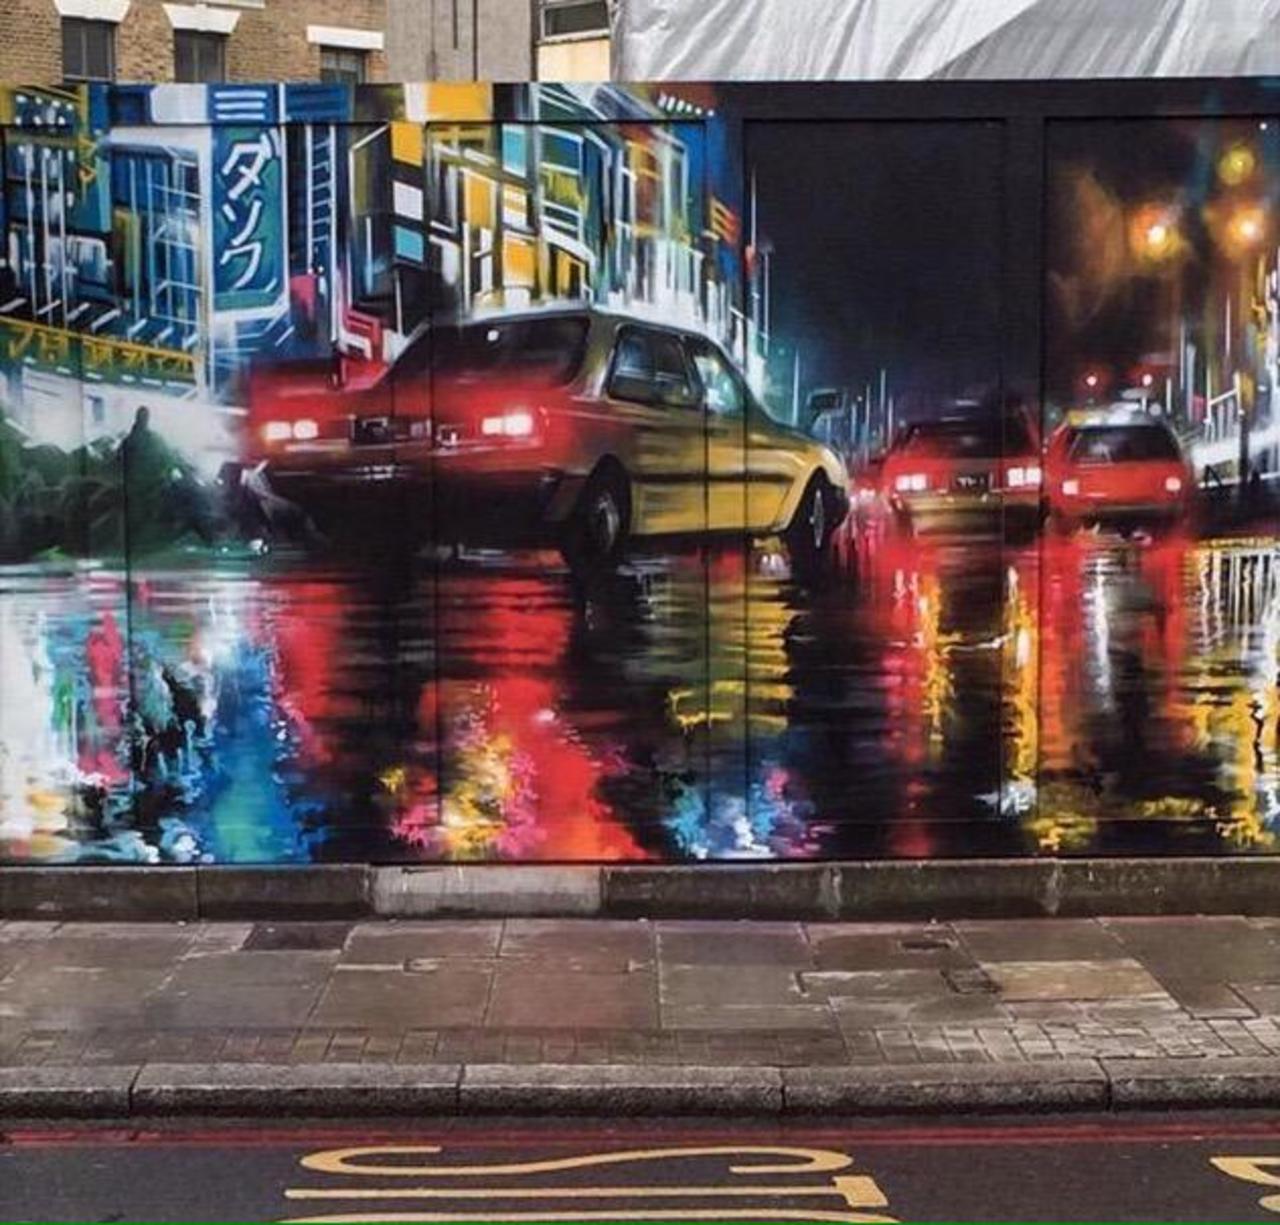 RT @GoogleStreetArt: New Street Art by @DanKitchener in Great Eastern Street London 

#art #mural #graffiti #streetart http://t.co/5qvbfCOacX